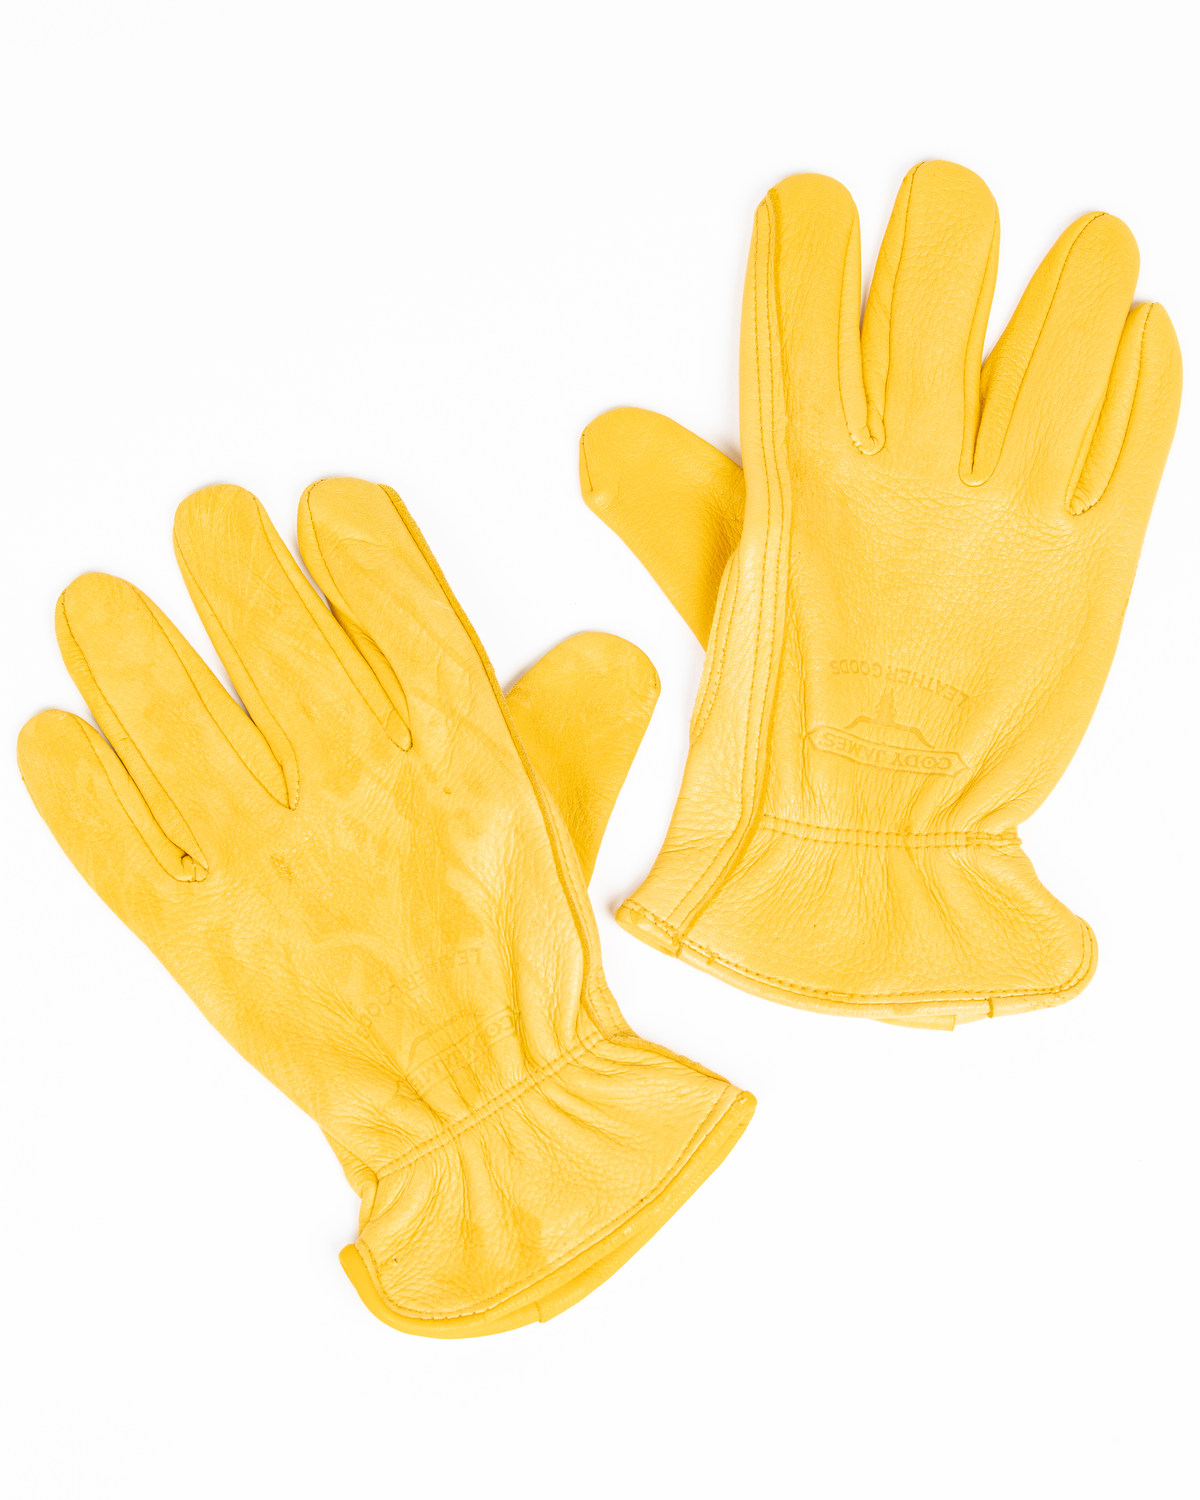 Cody James Men's Driver Work Gloves